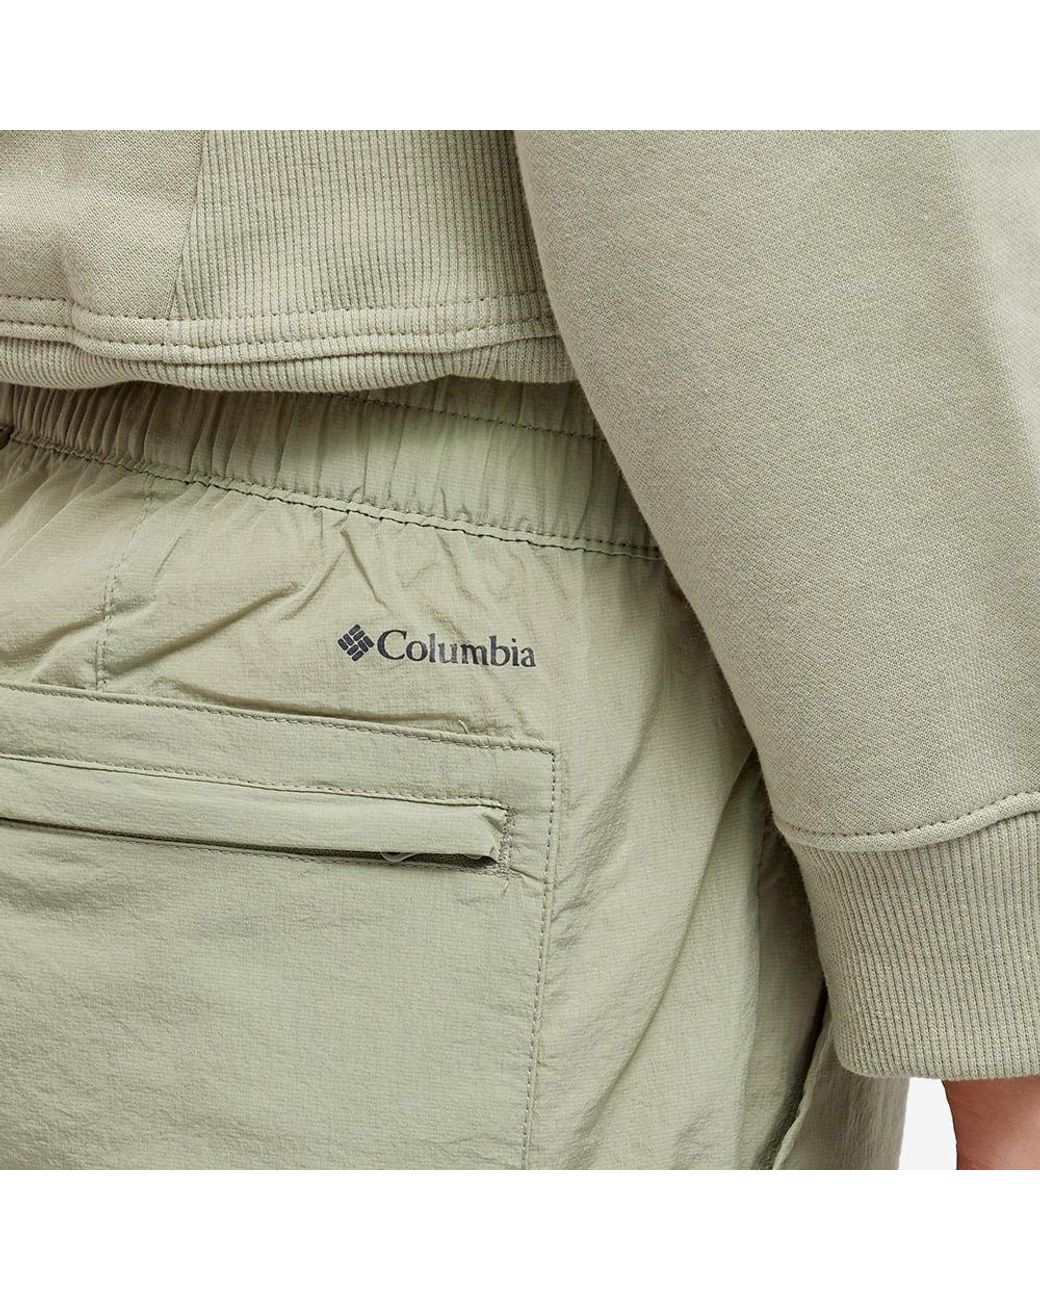 Columbia tear away hiking pants Cream Size 40x30  Depop